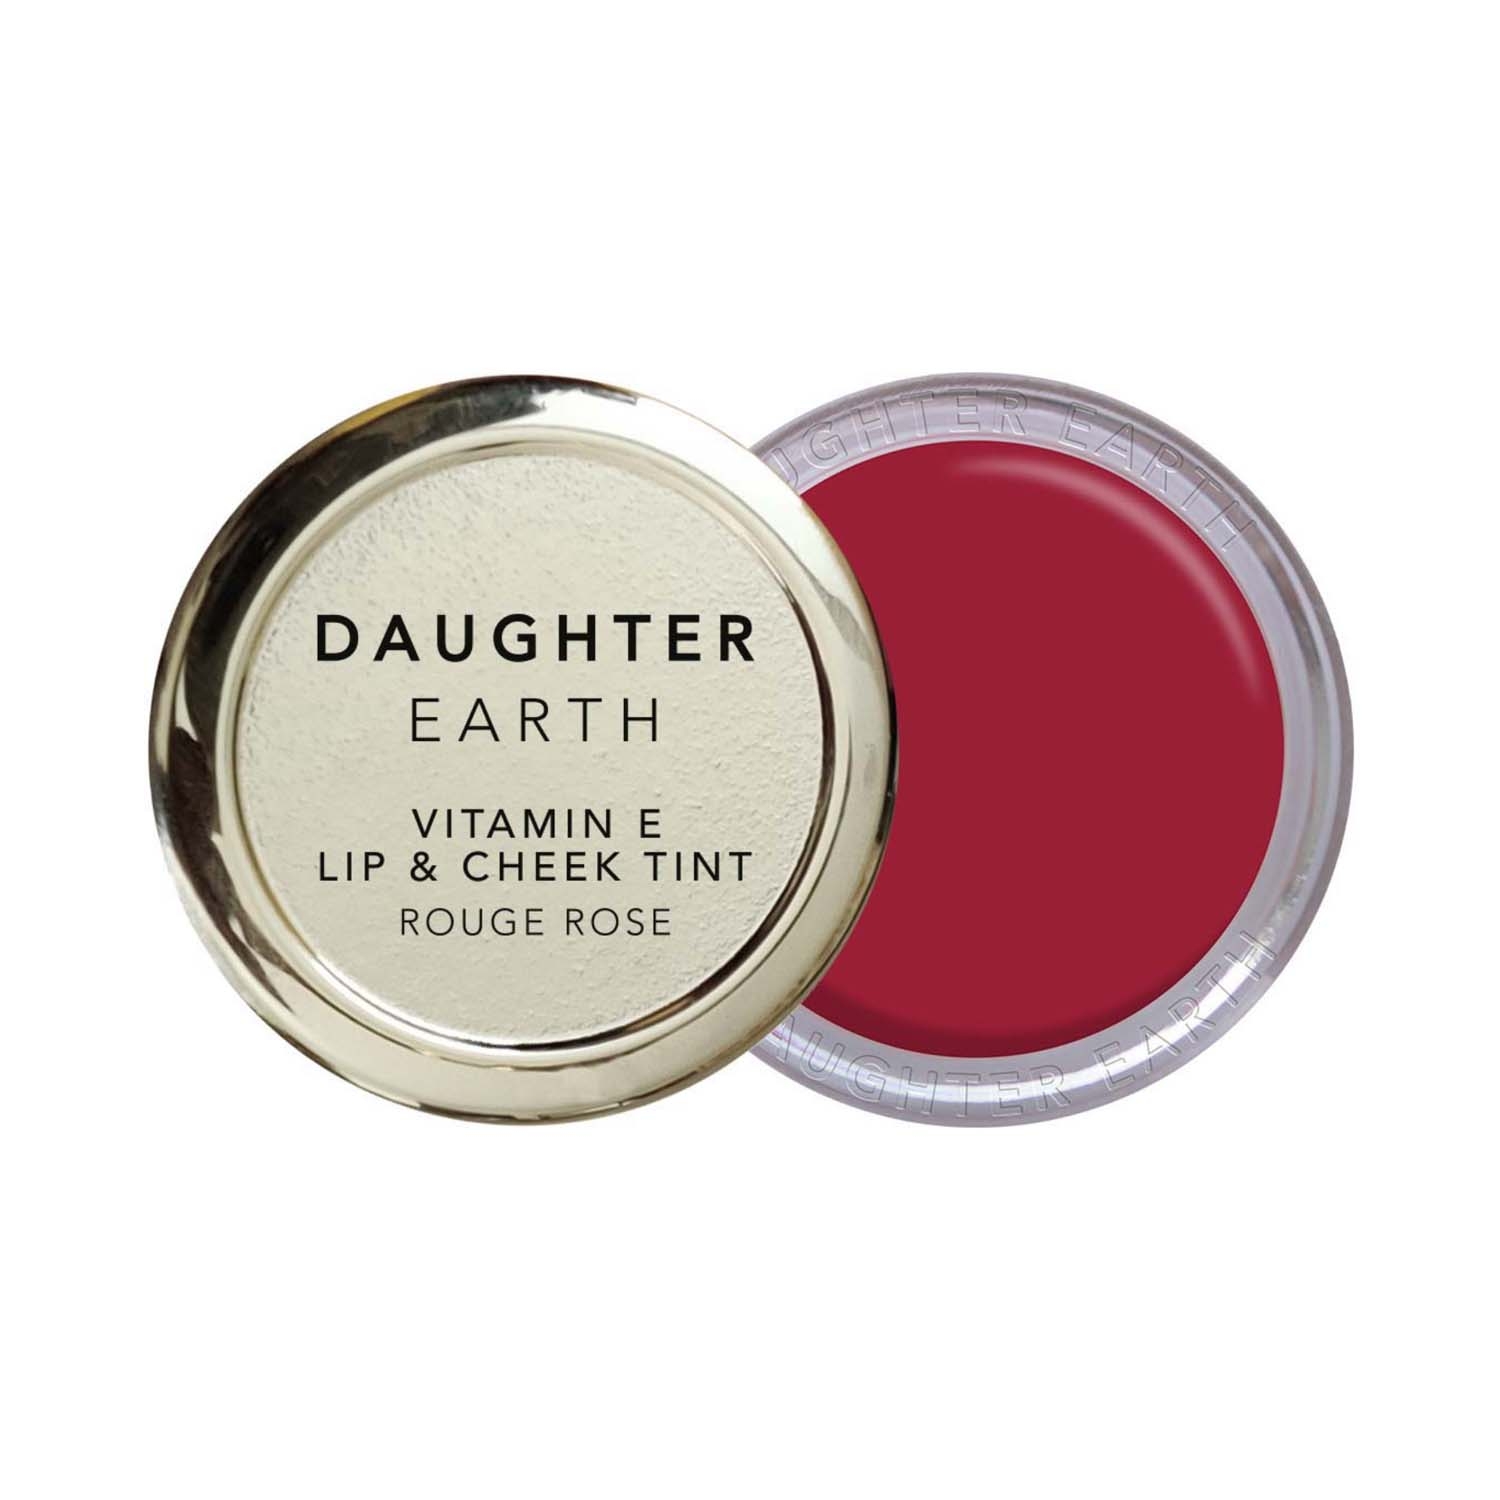  | DAUGHTER EARTH Vitamin E Lip & Cheek Tint - Rouge Rose (4.5g)